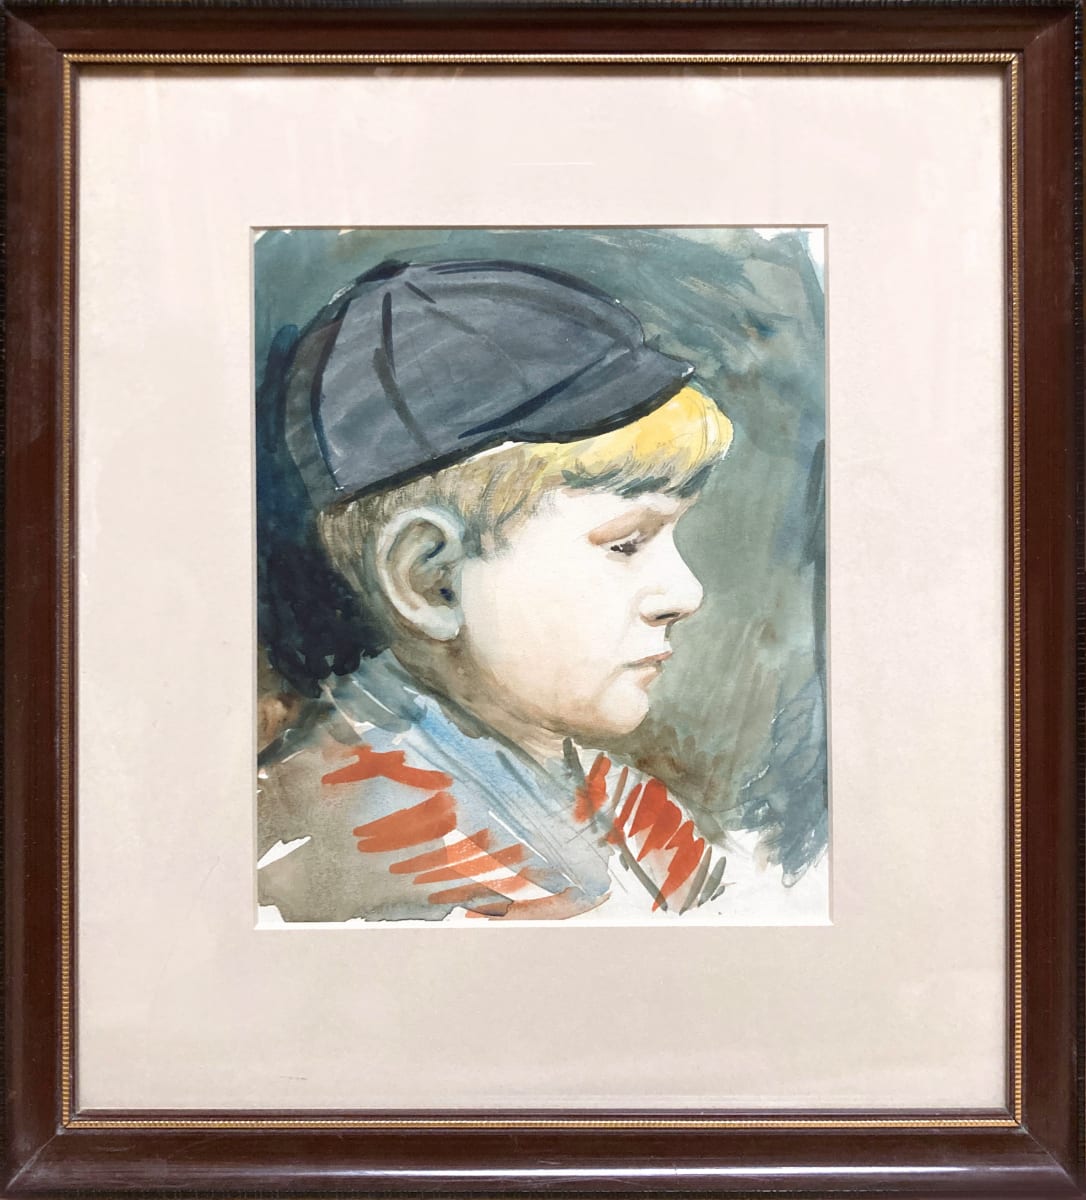 2421 - Portrait of a young boy by Llewellyn Petley-Jones (1908-1986) 